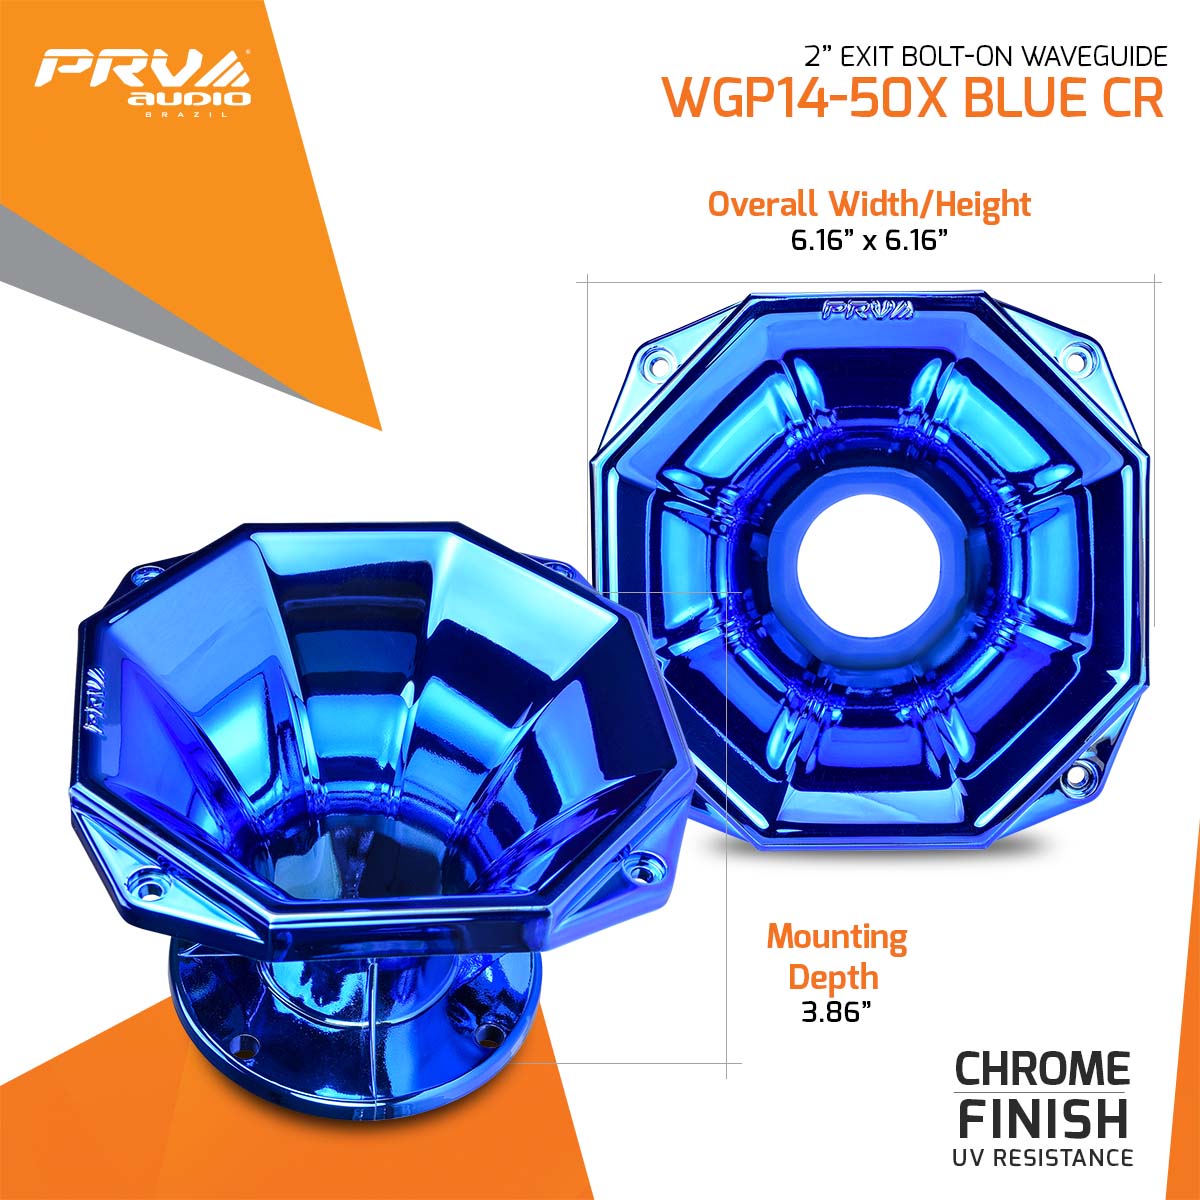 WGP14-50X - Dims Infographic - BLUE CR